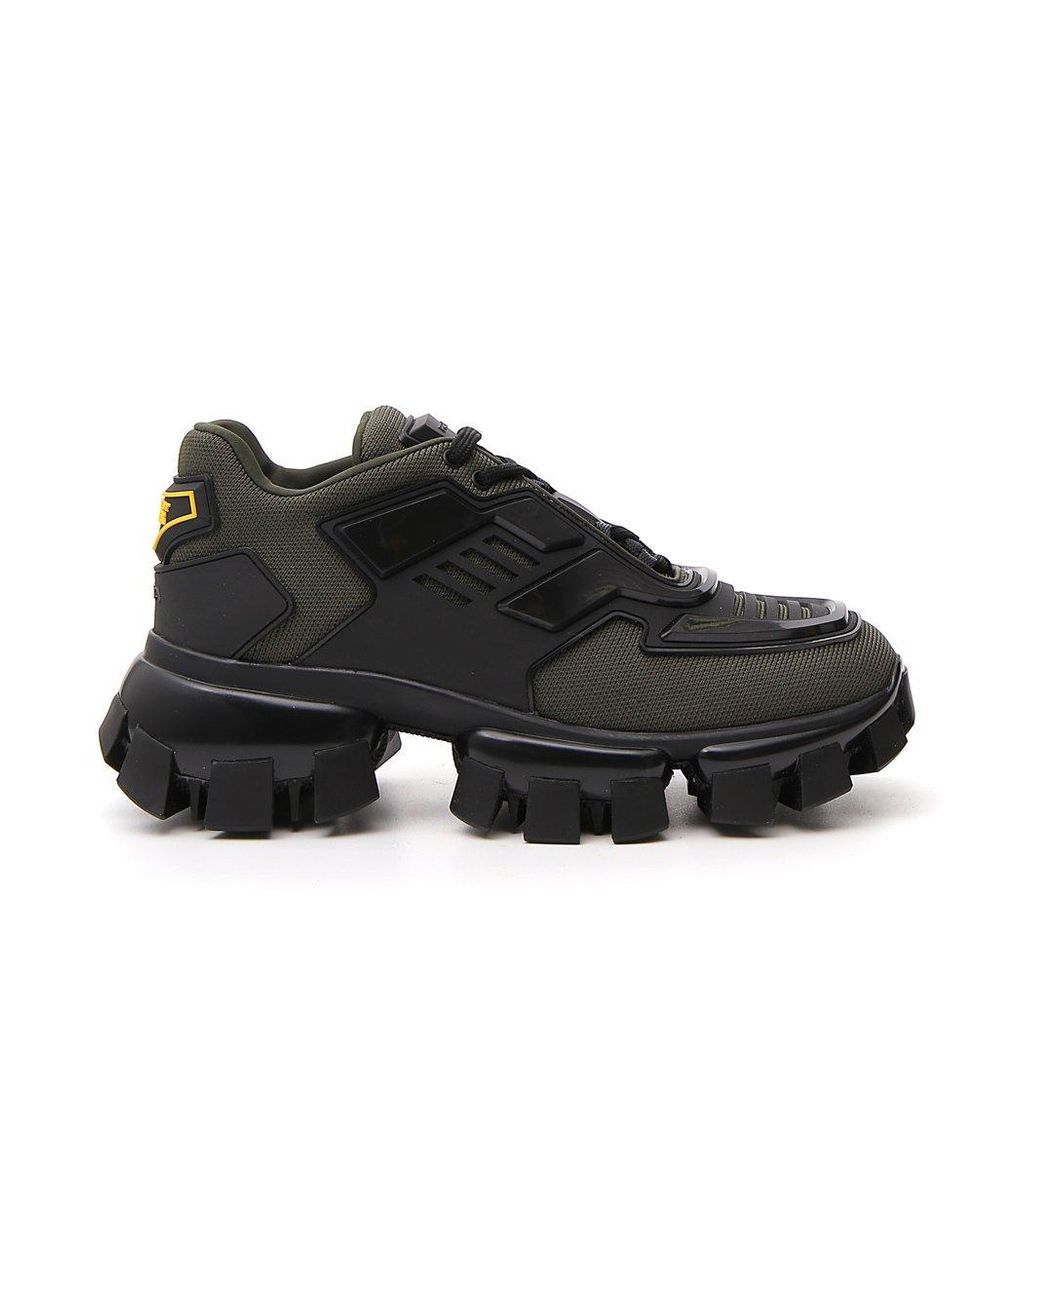 Cloudbust patent leather sandal Prada Black size 38.5 EU in Patent leather  - 31146119